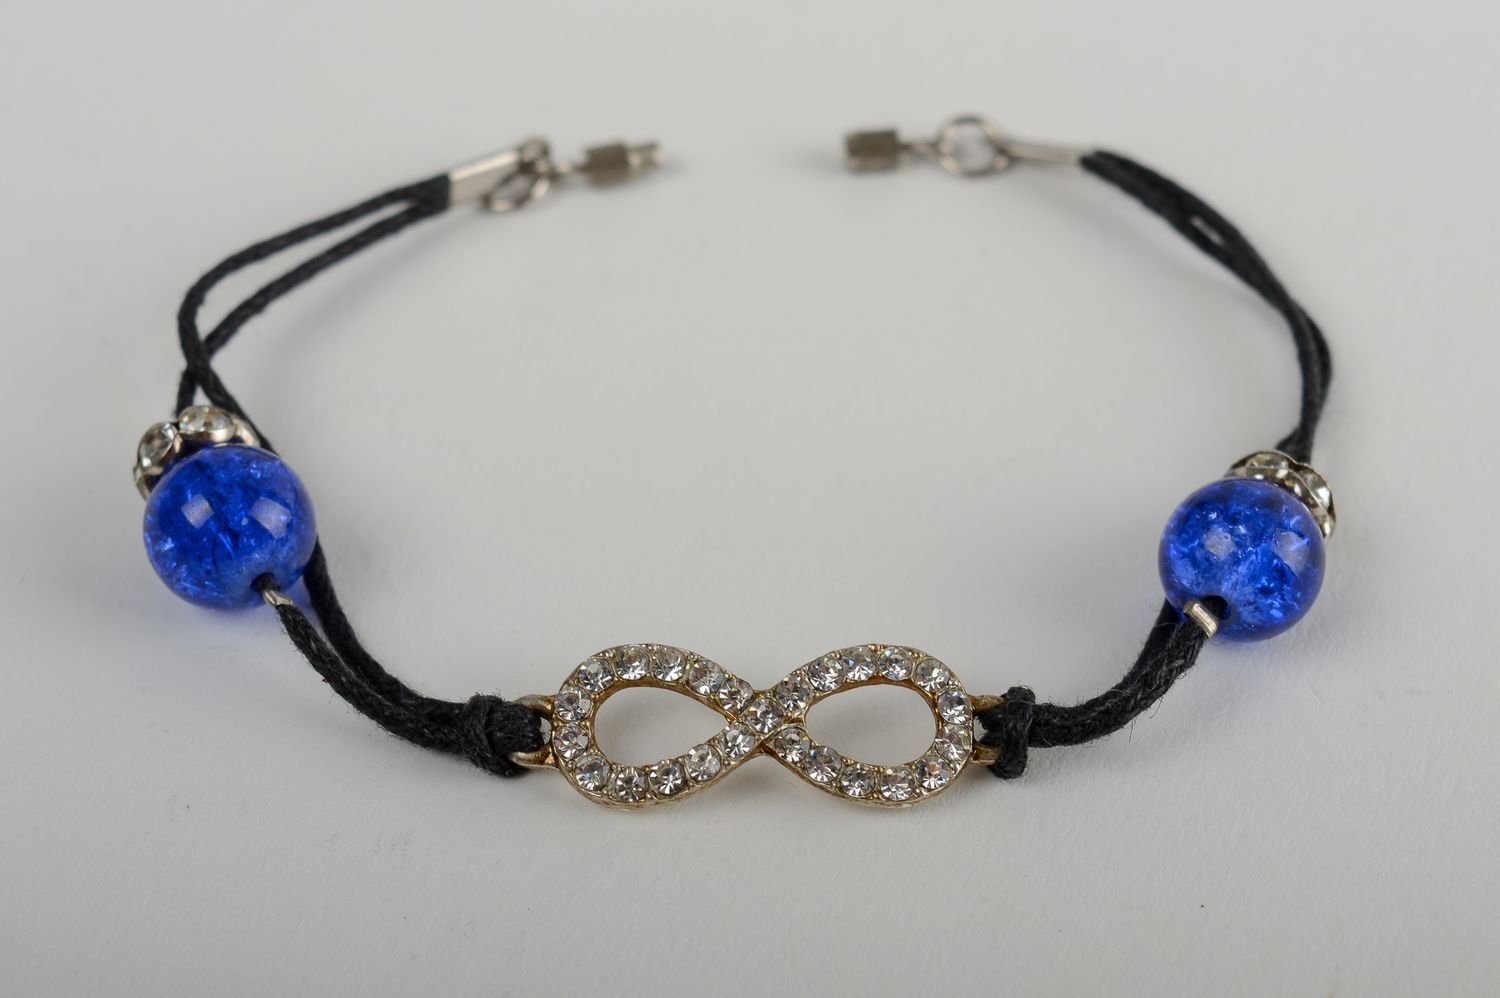 Unusual handmade woven cord bracelet beaded bracelet designs gifts for her photo 1